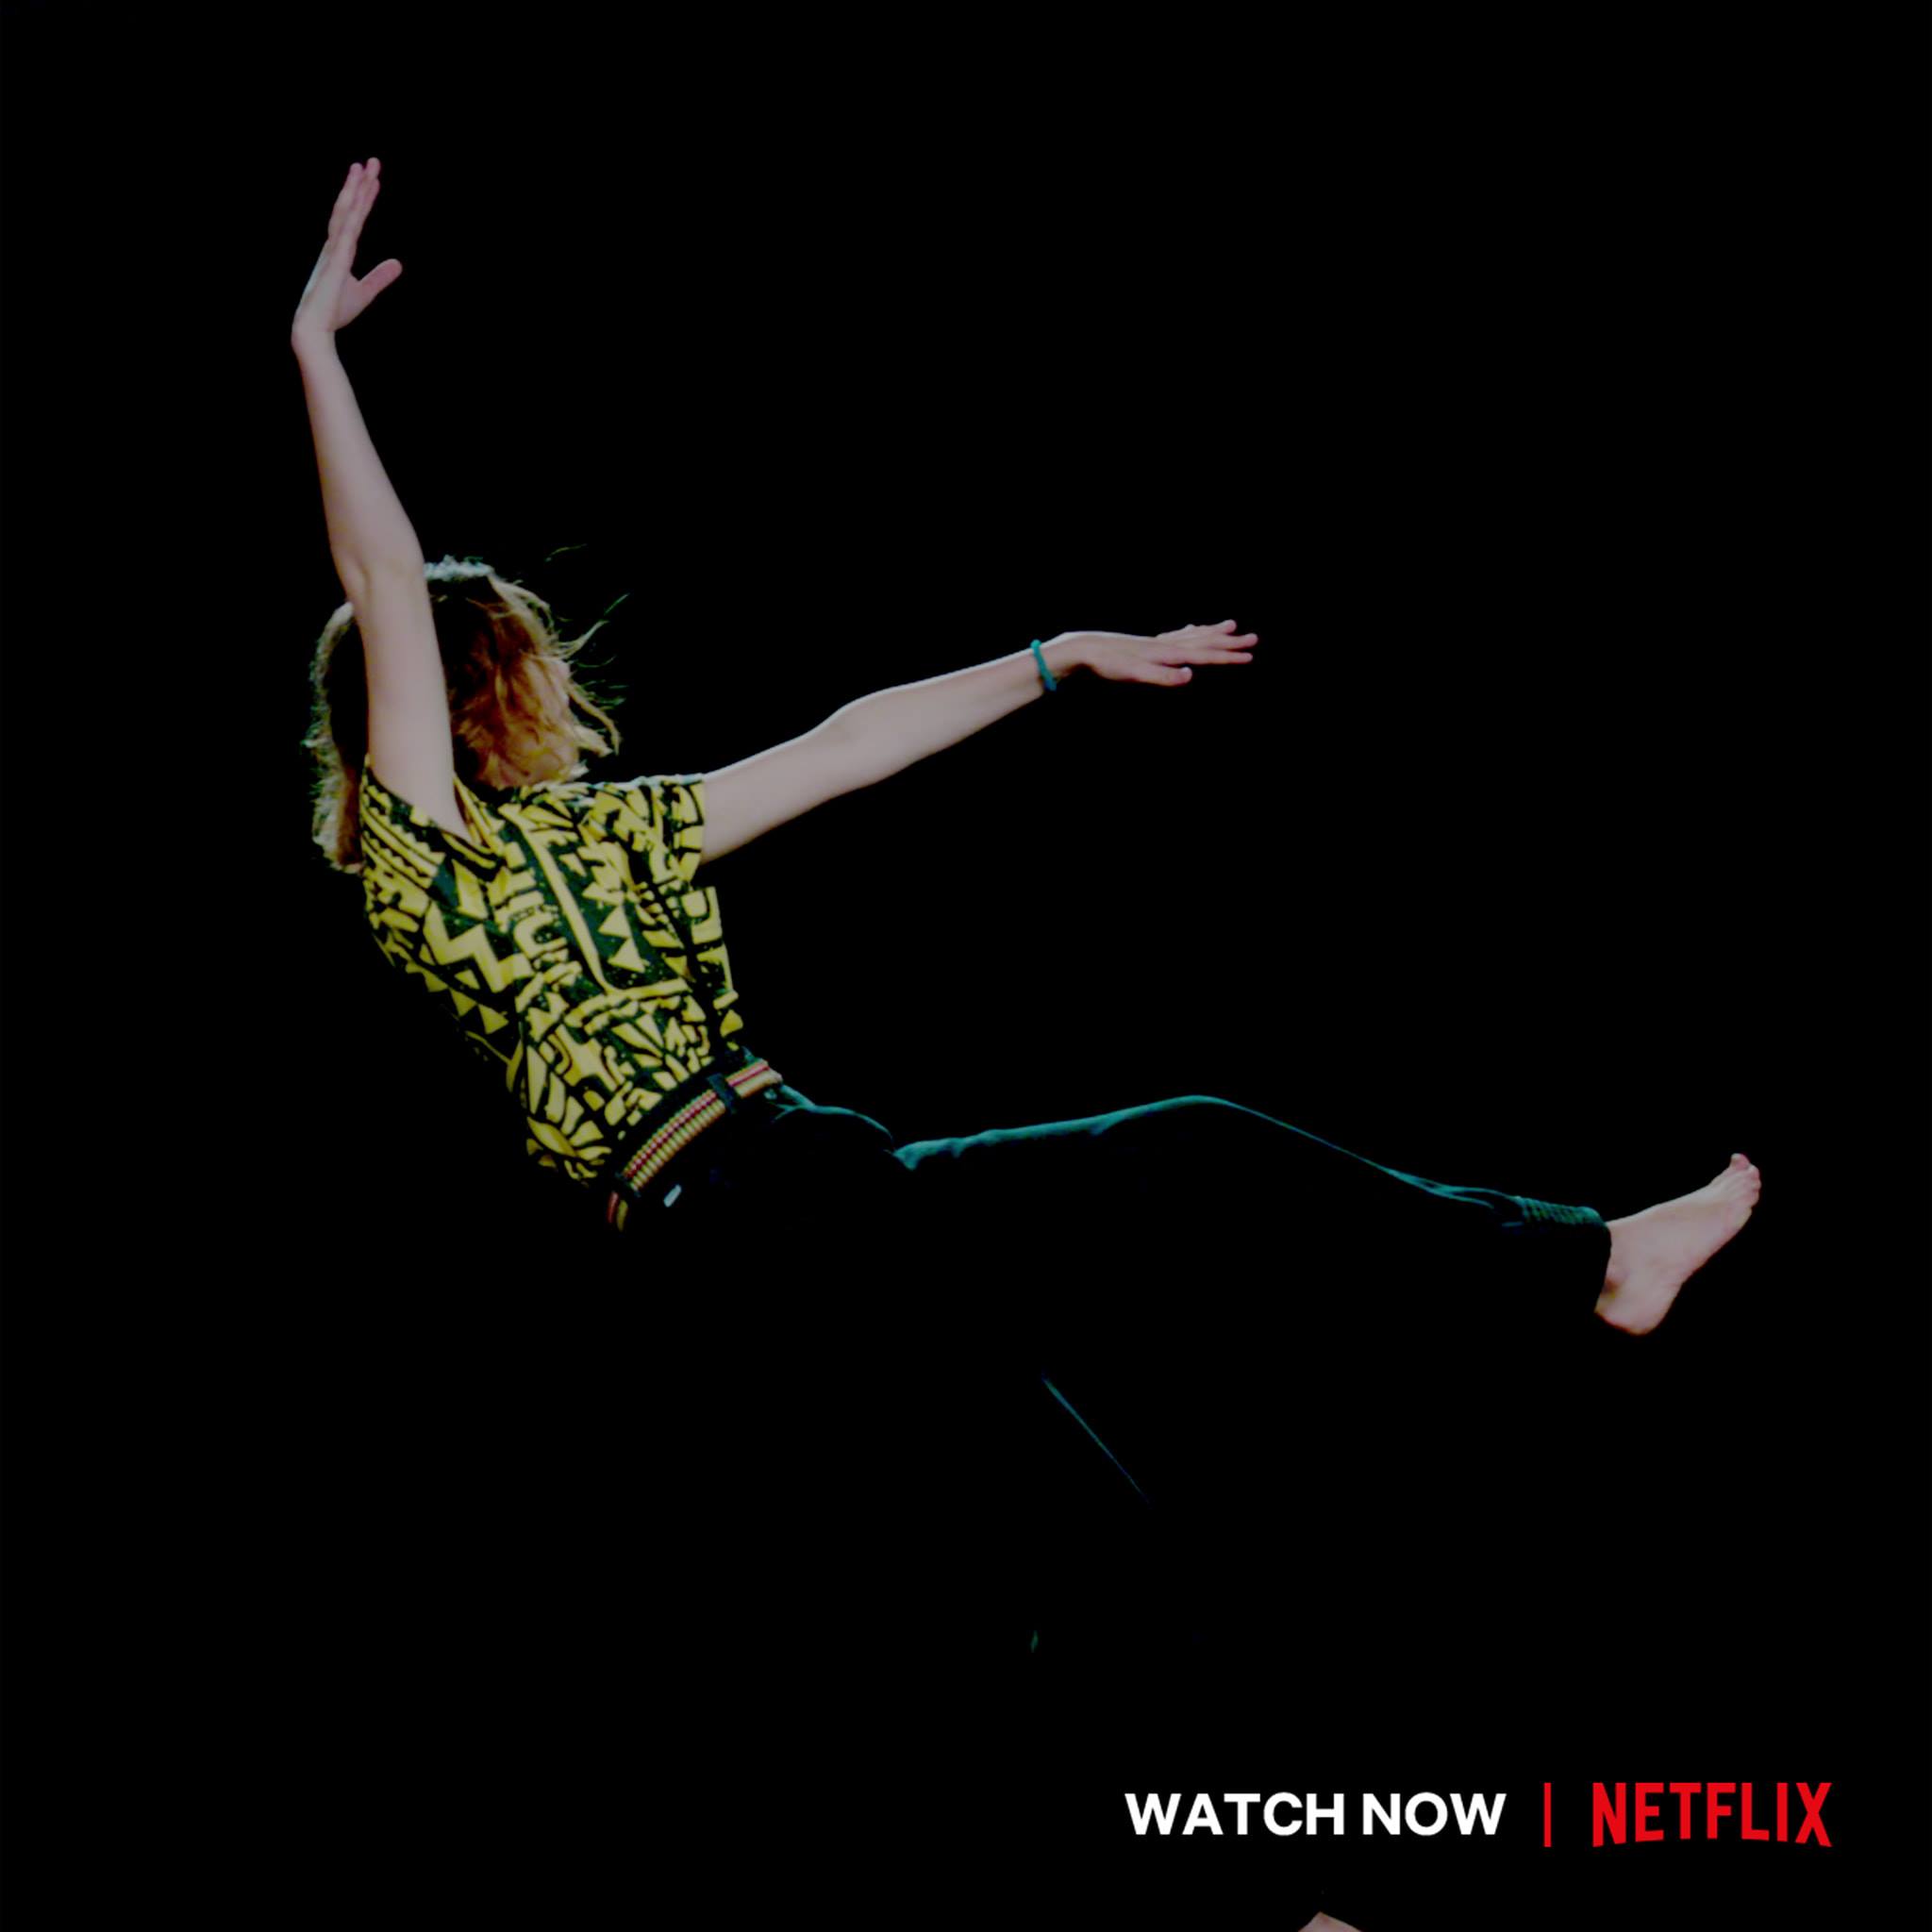 Watch Stranger Things Season 3 now on Netflix